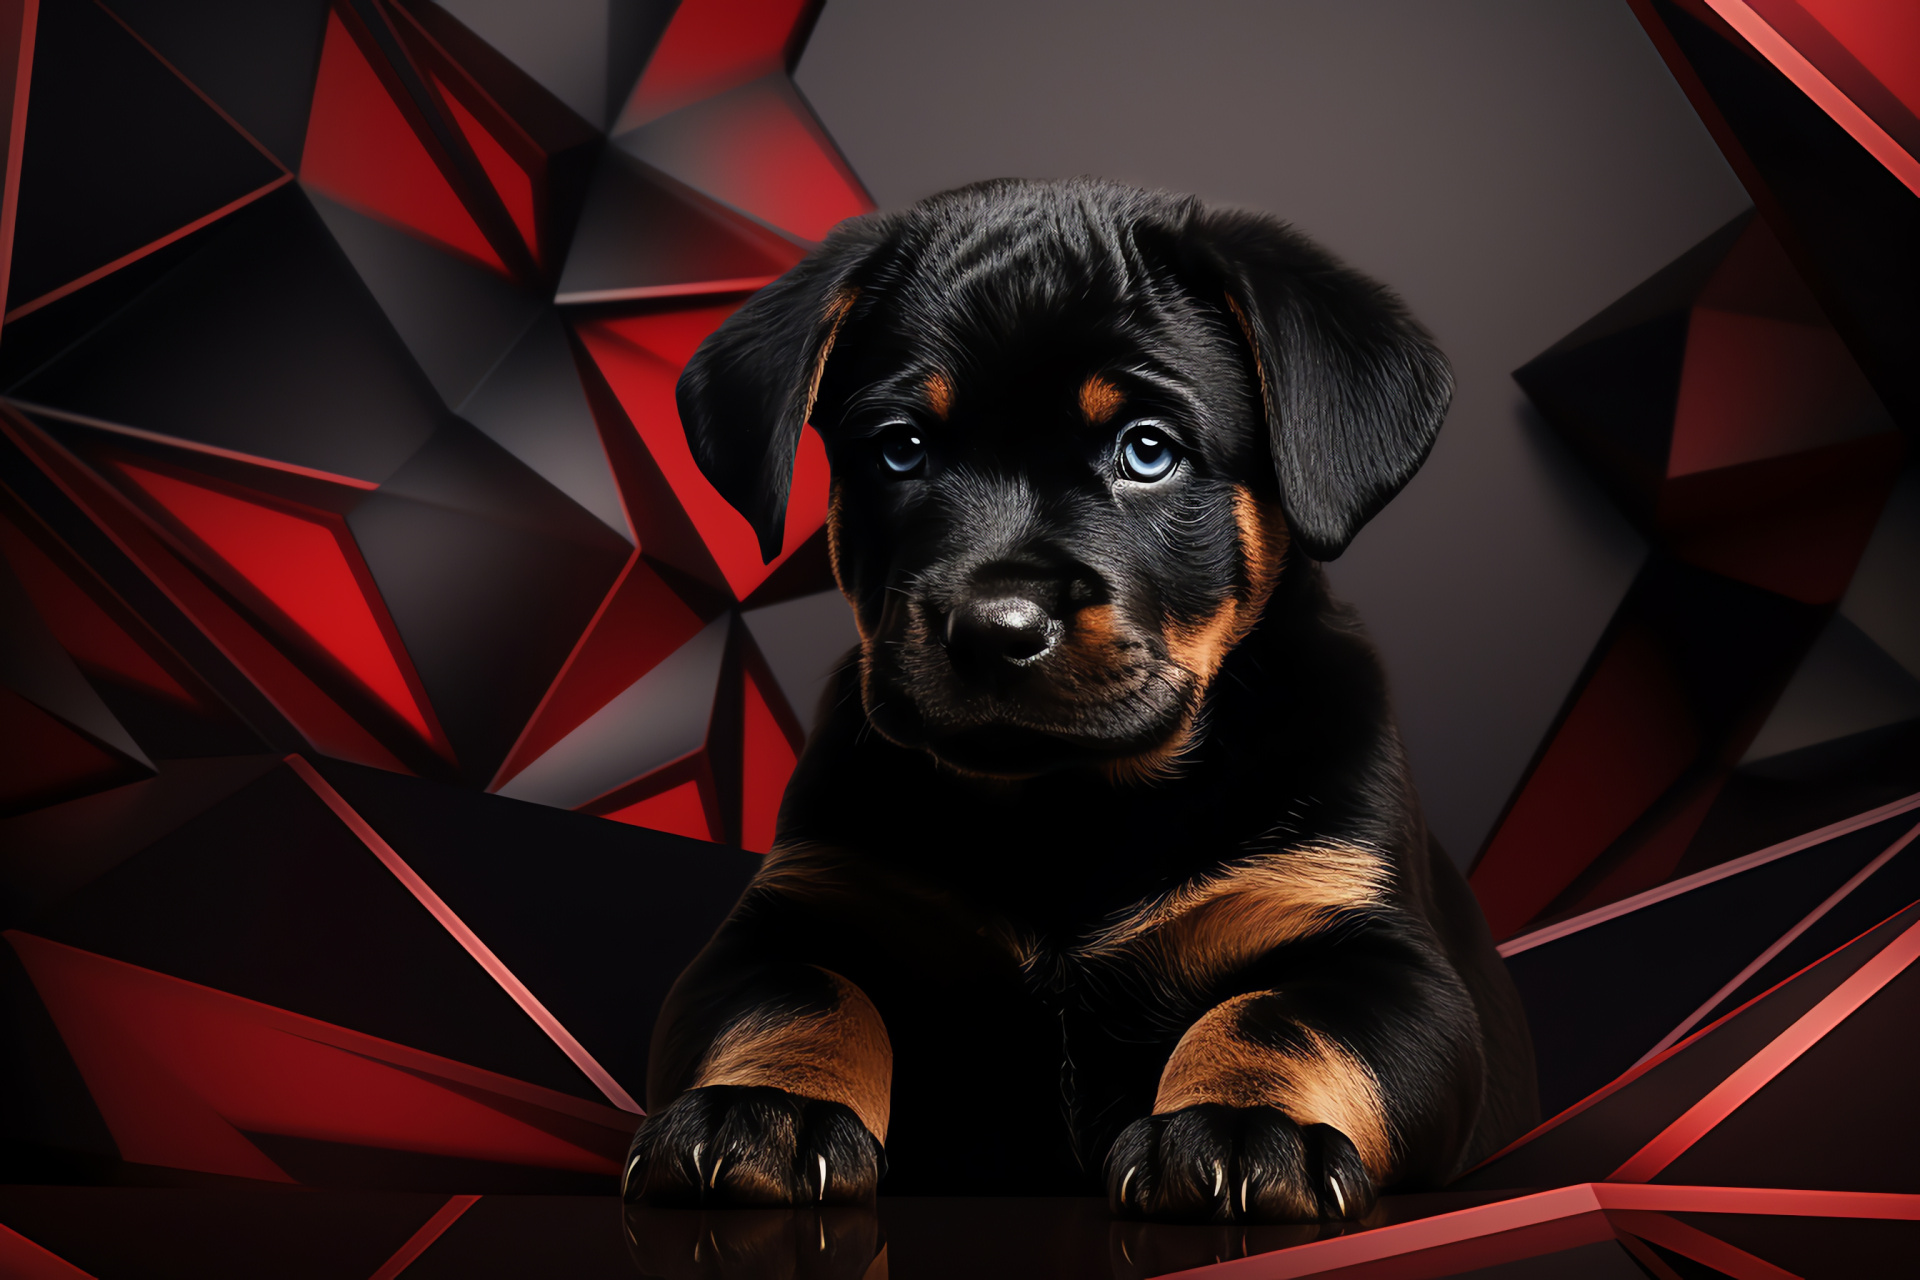 Rottweiler pup, endearing stare, elegant silhouette, patterned backdrop, canine contrast, HD Desktop Image